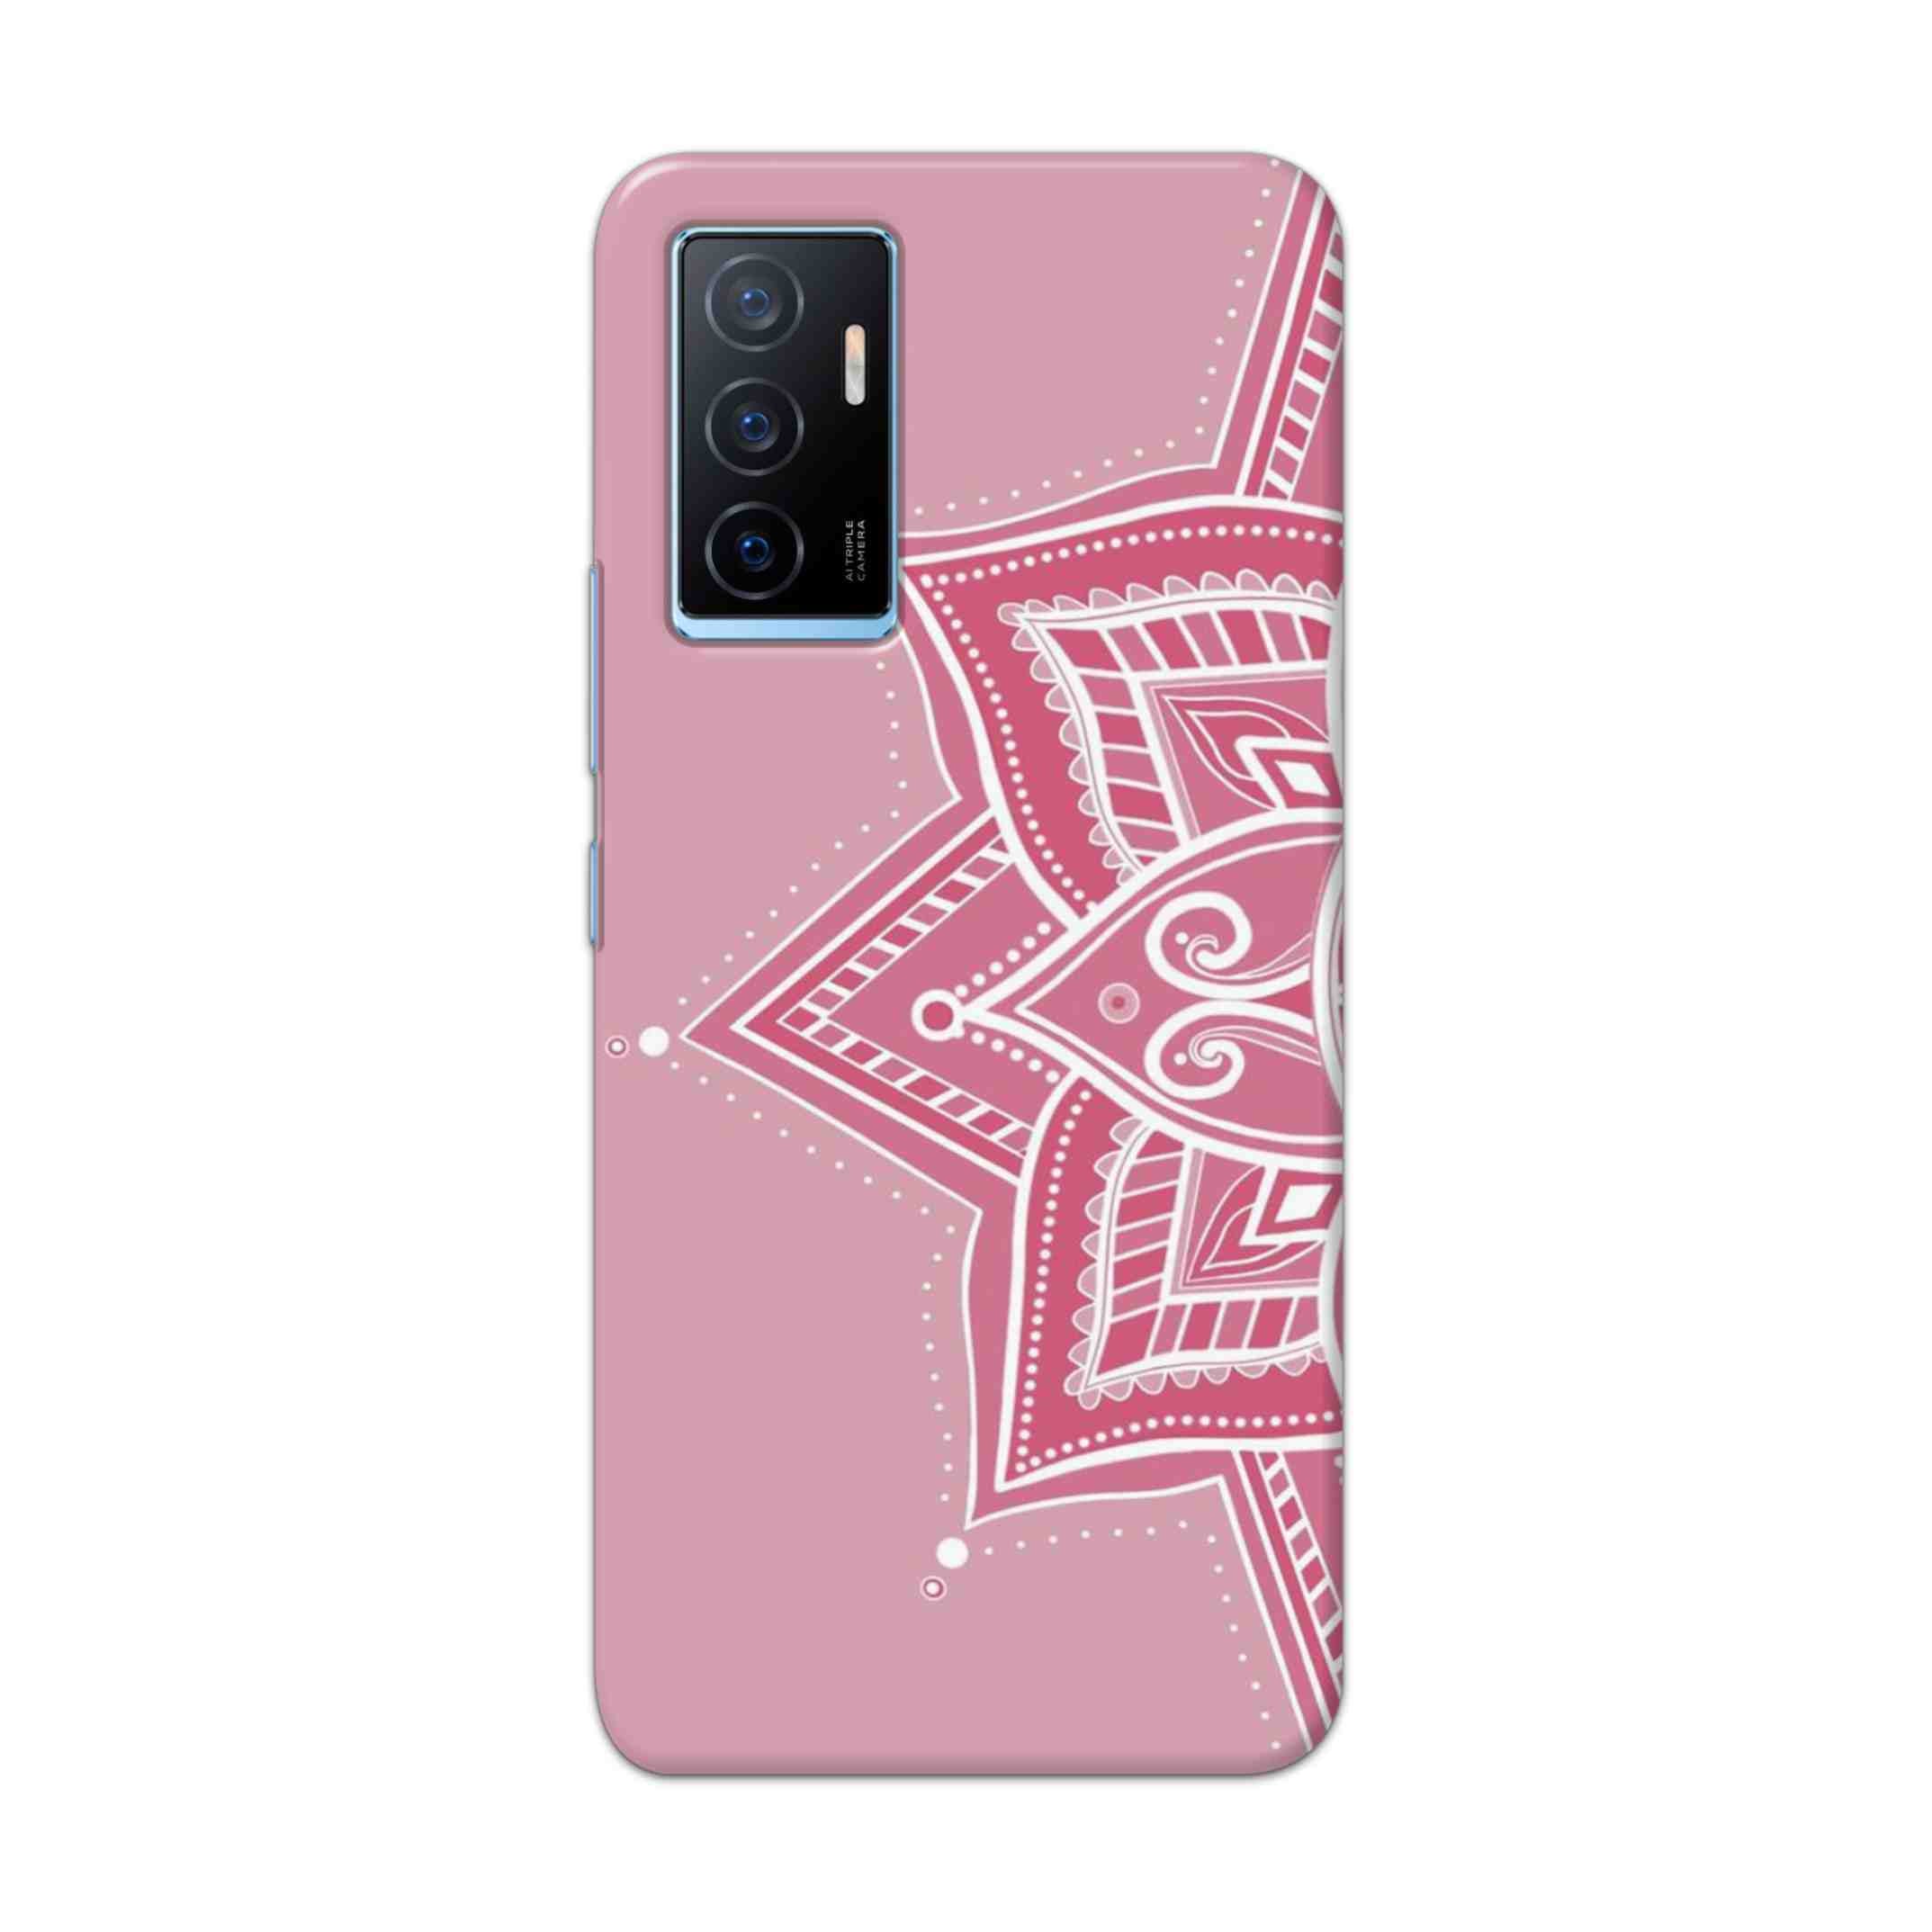 Buy Pink Rangoli Hard Back Mobile Phone Case Cover For Vivo Y75 4G Online